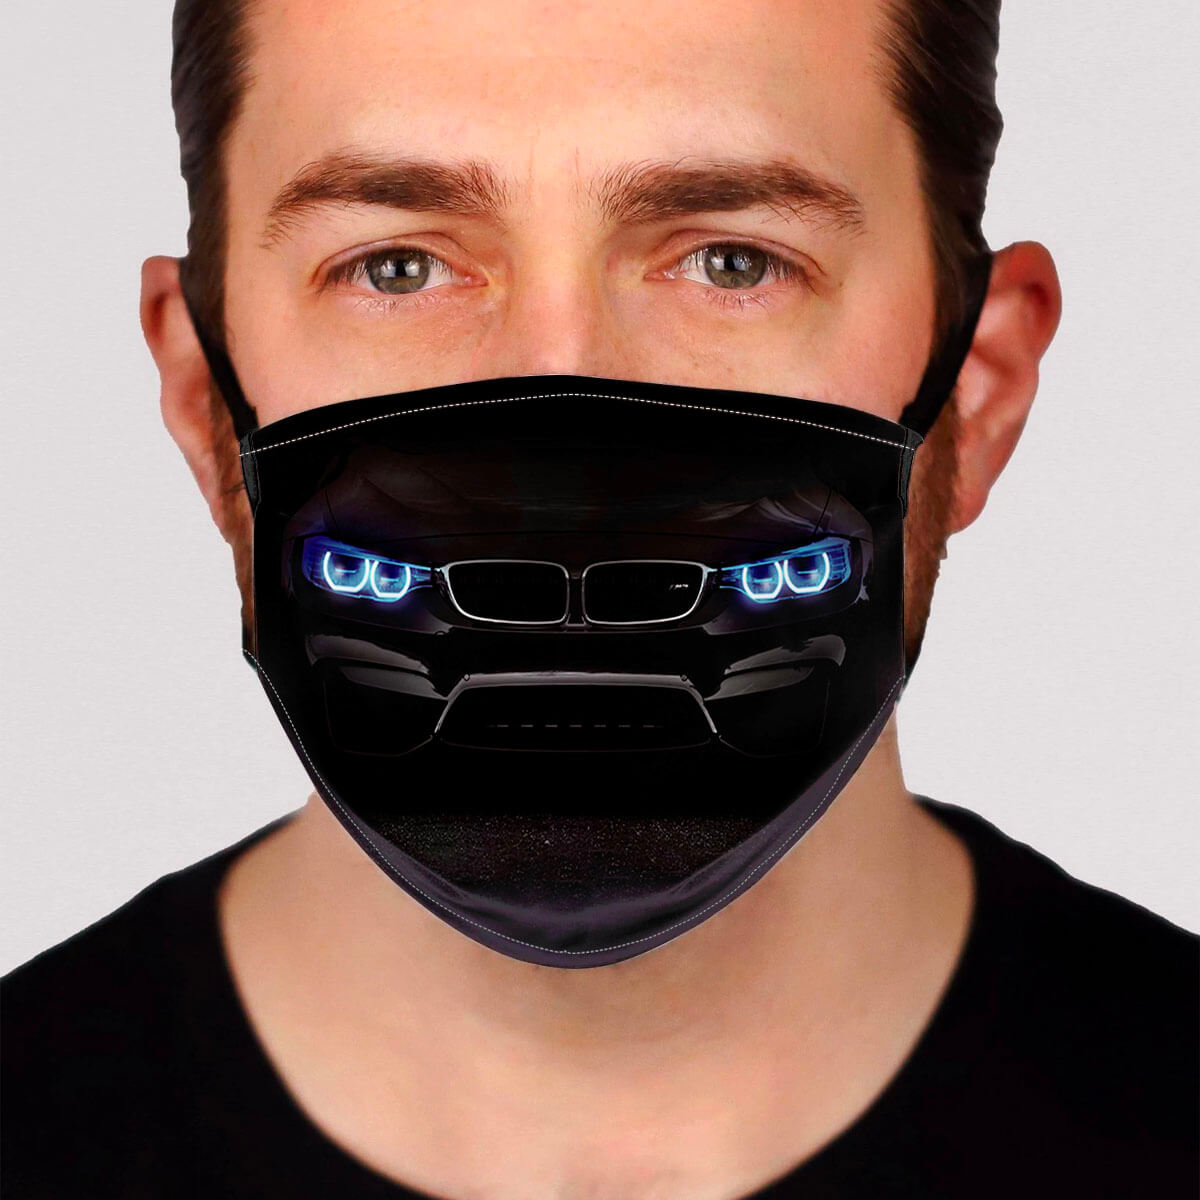 B.M.W Headlights Face Mask